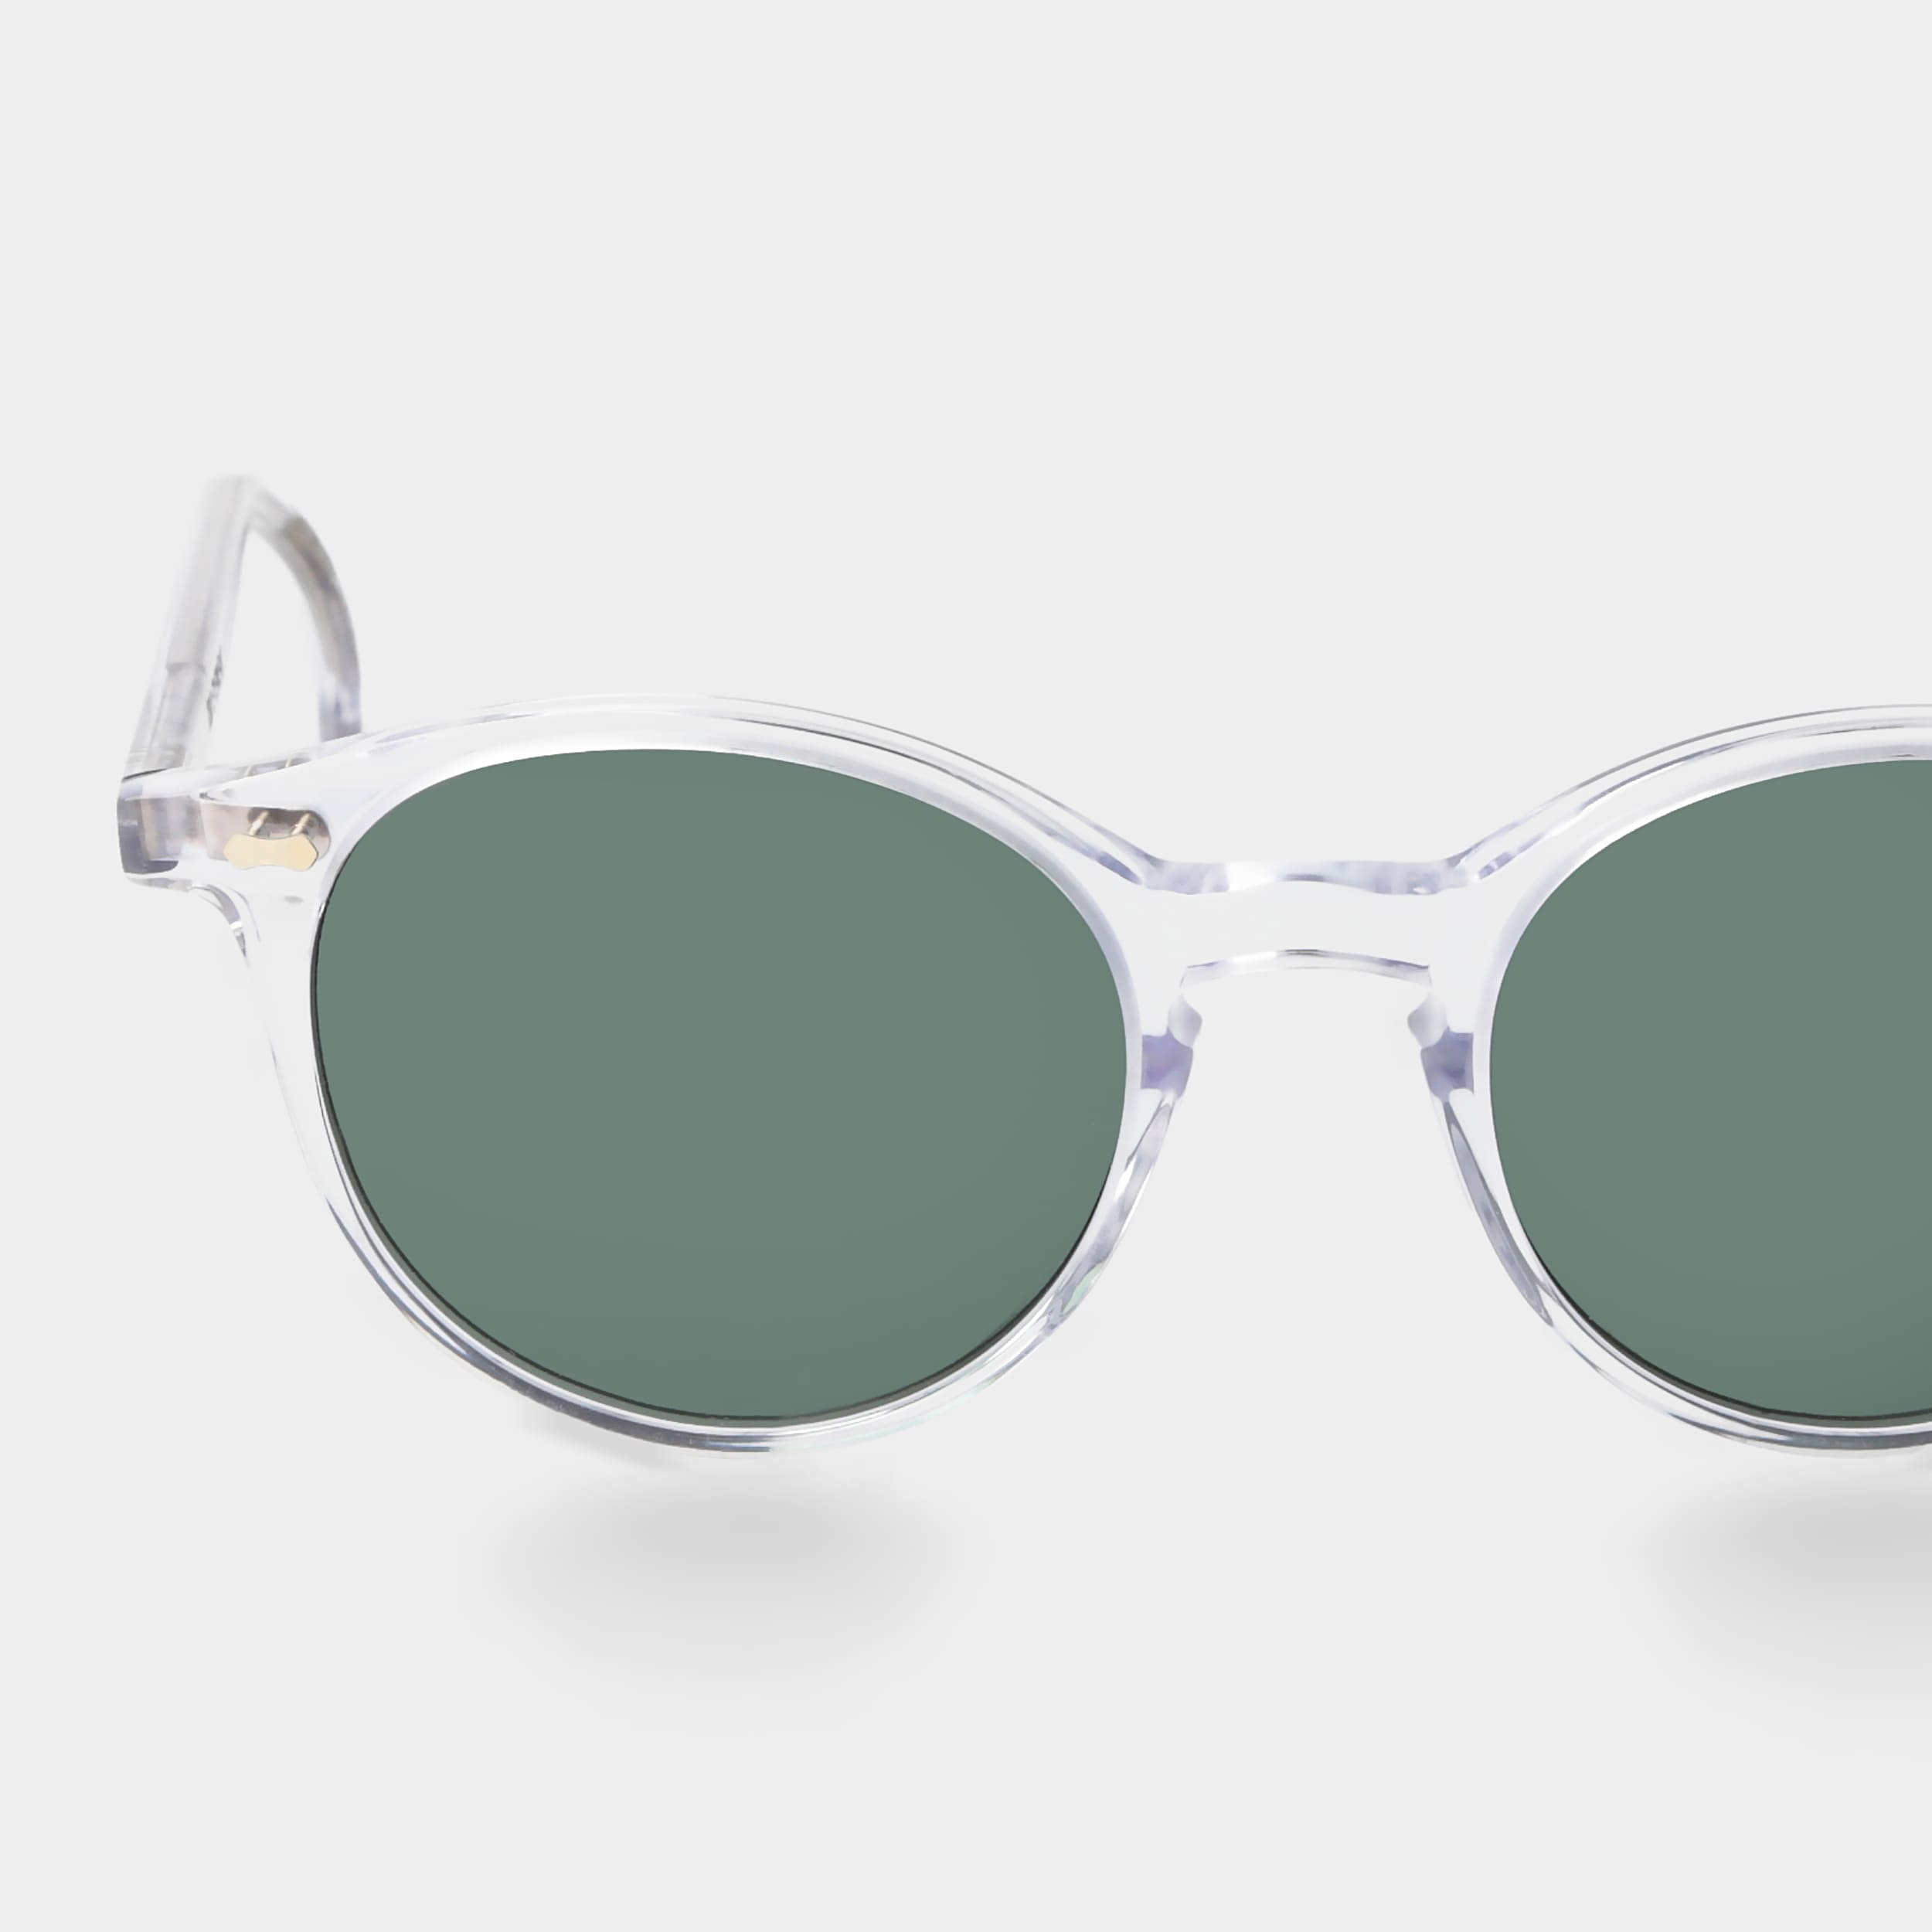 sunglasses-cran-eco-transparent-bottle-green-sustainable-tbd-eyewear-lens